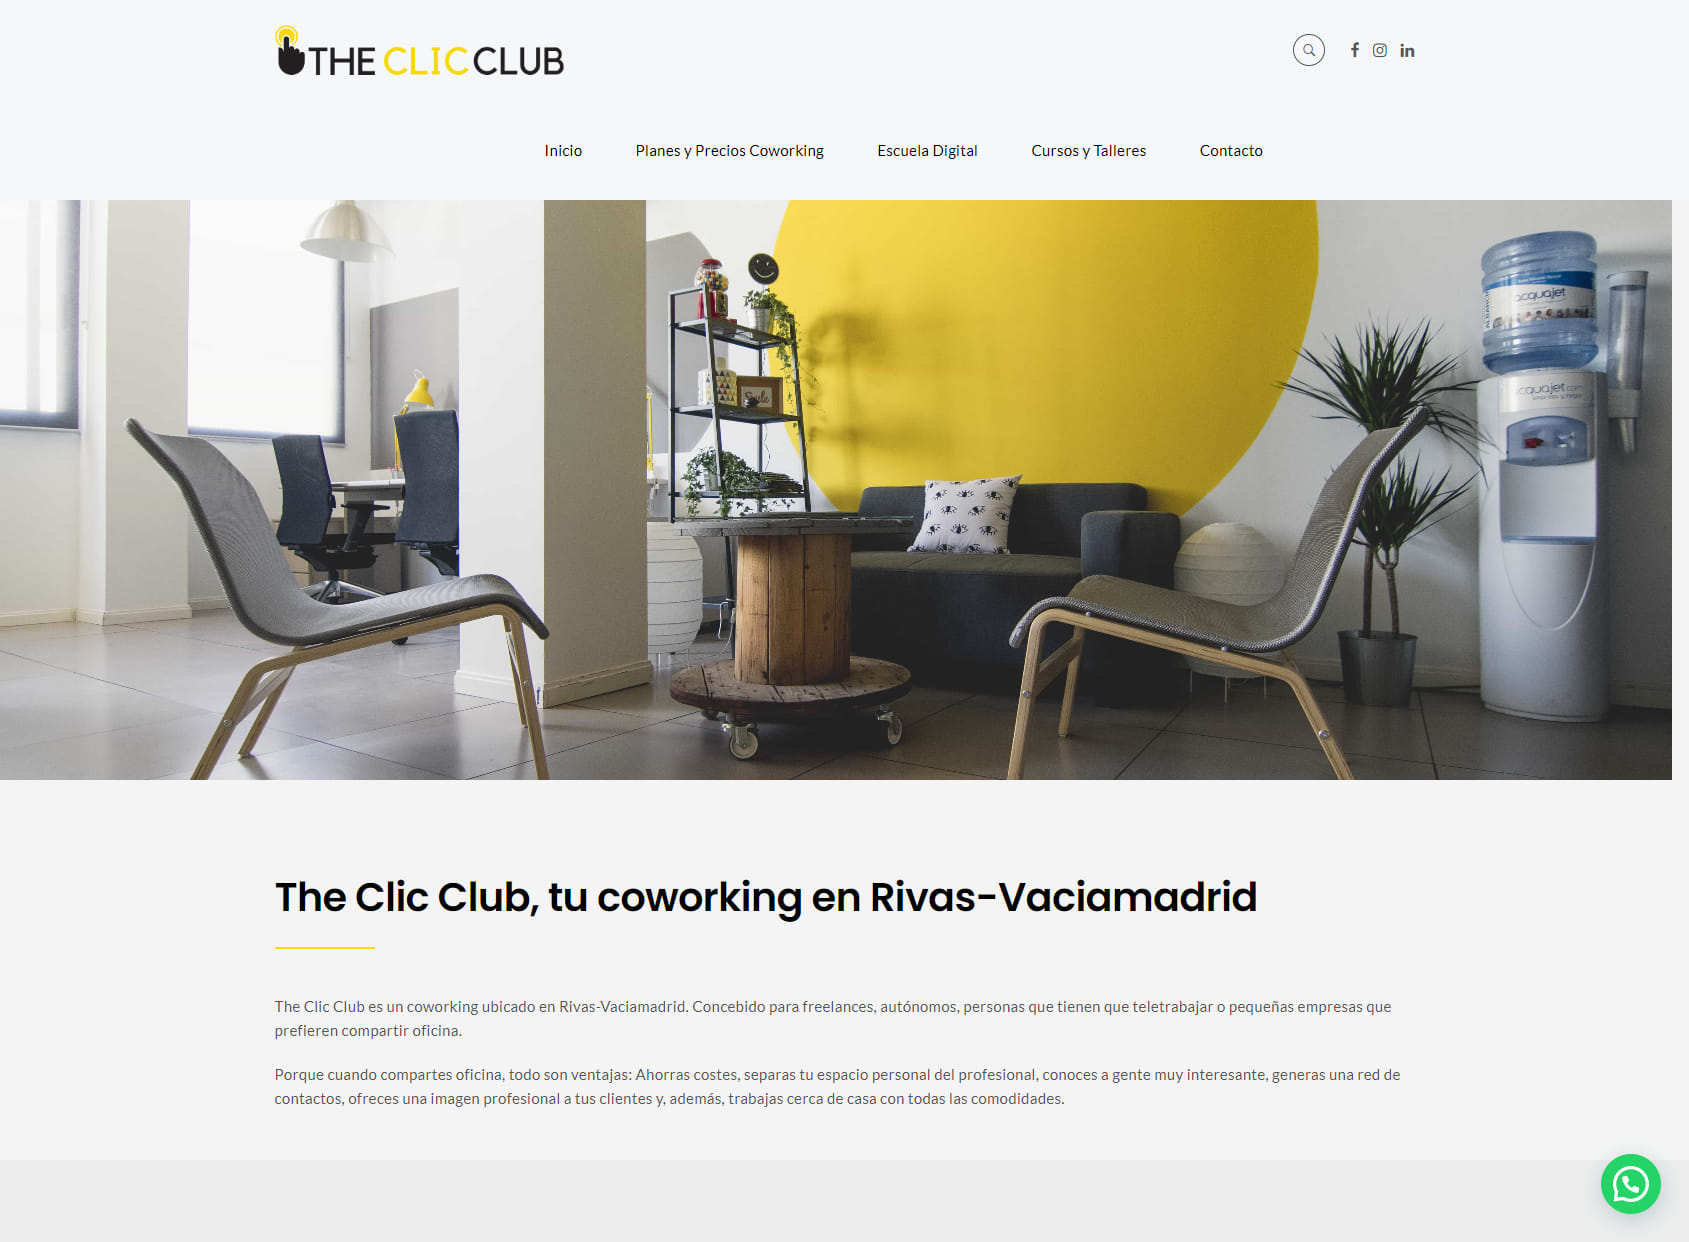 The Clic Club